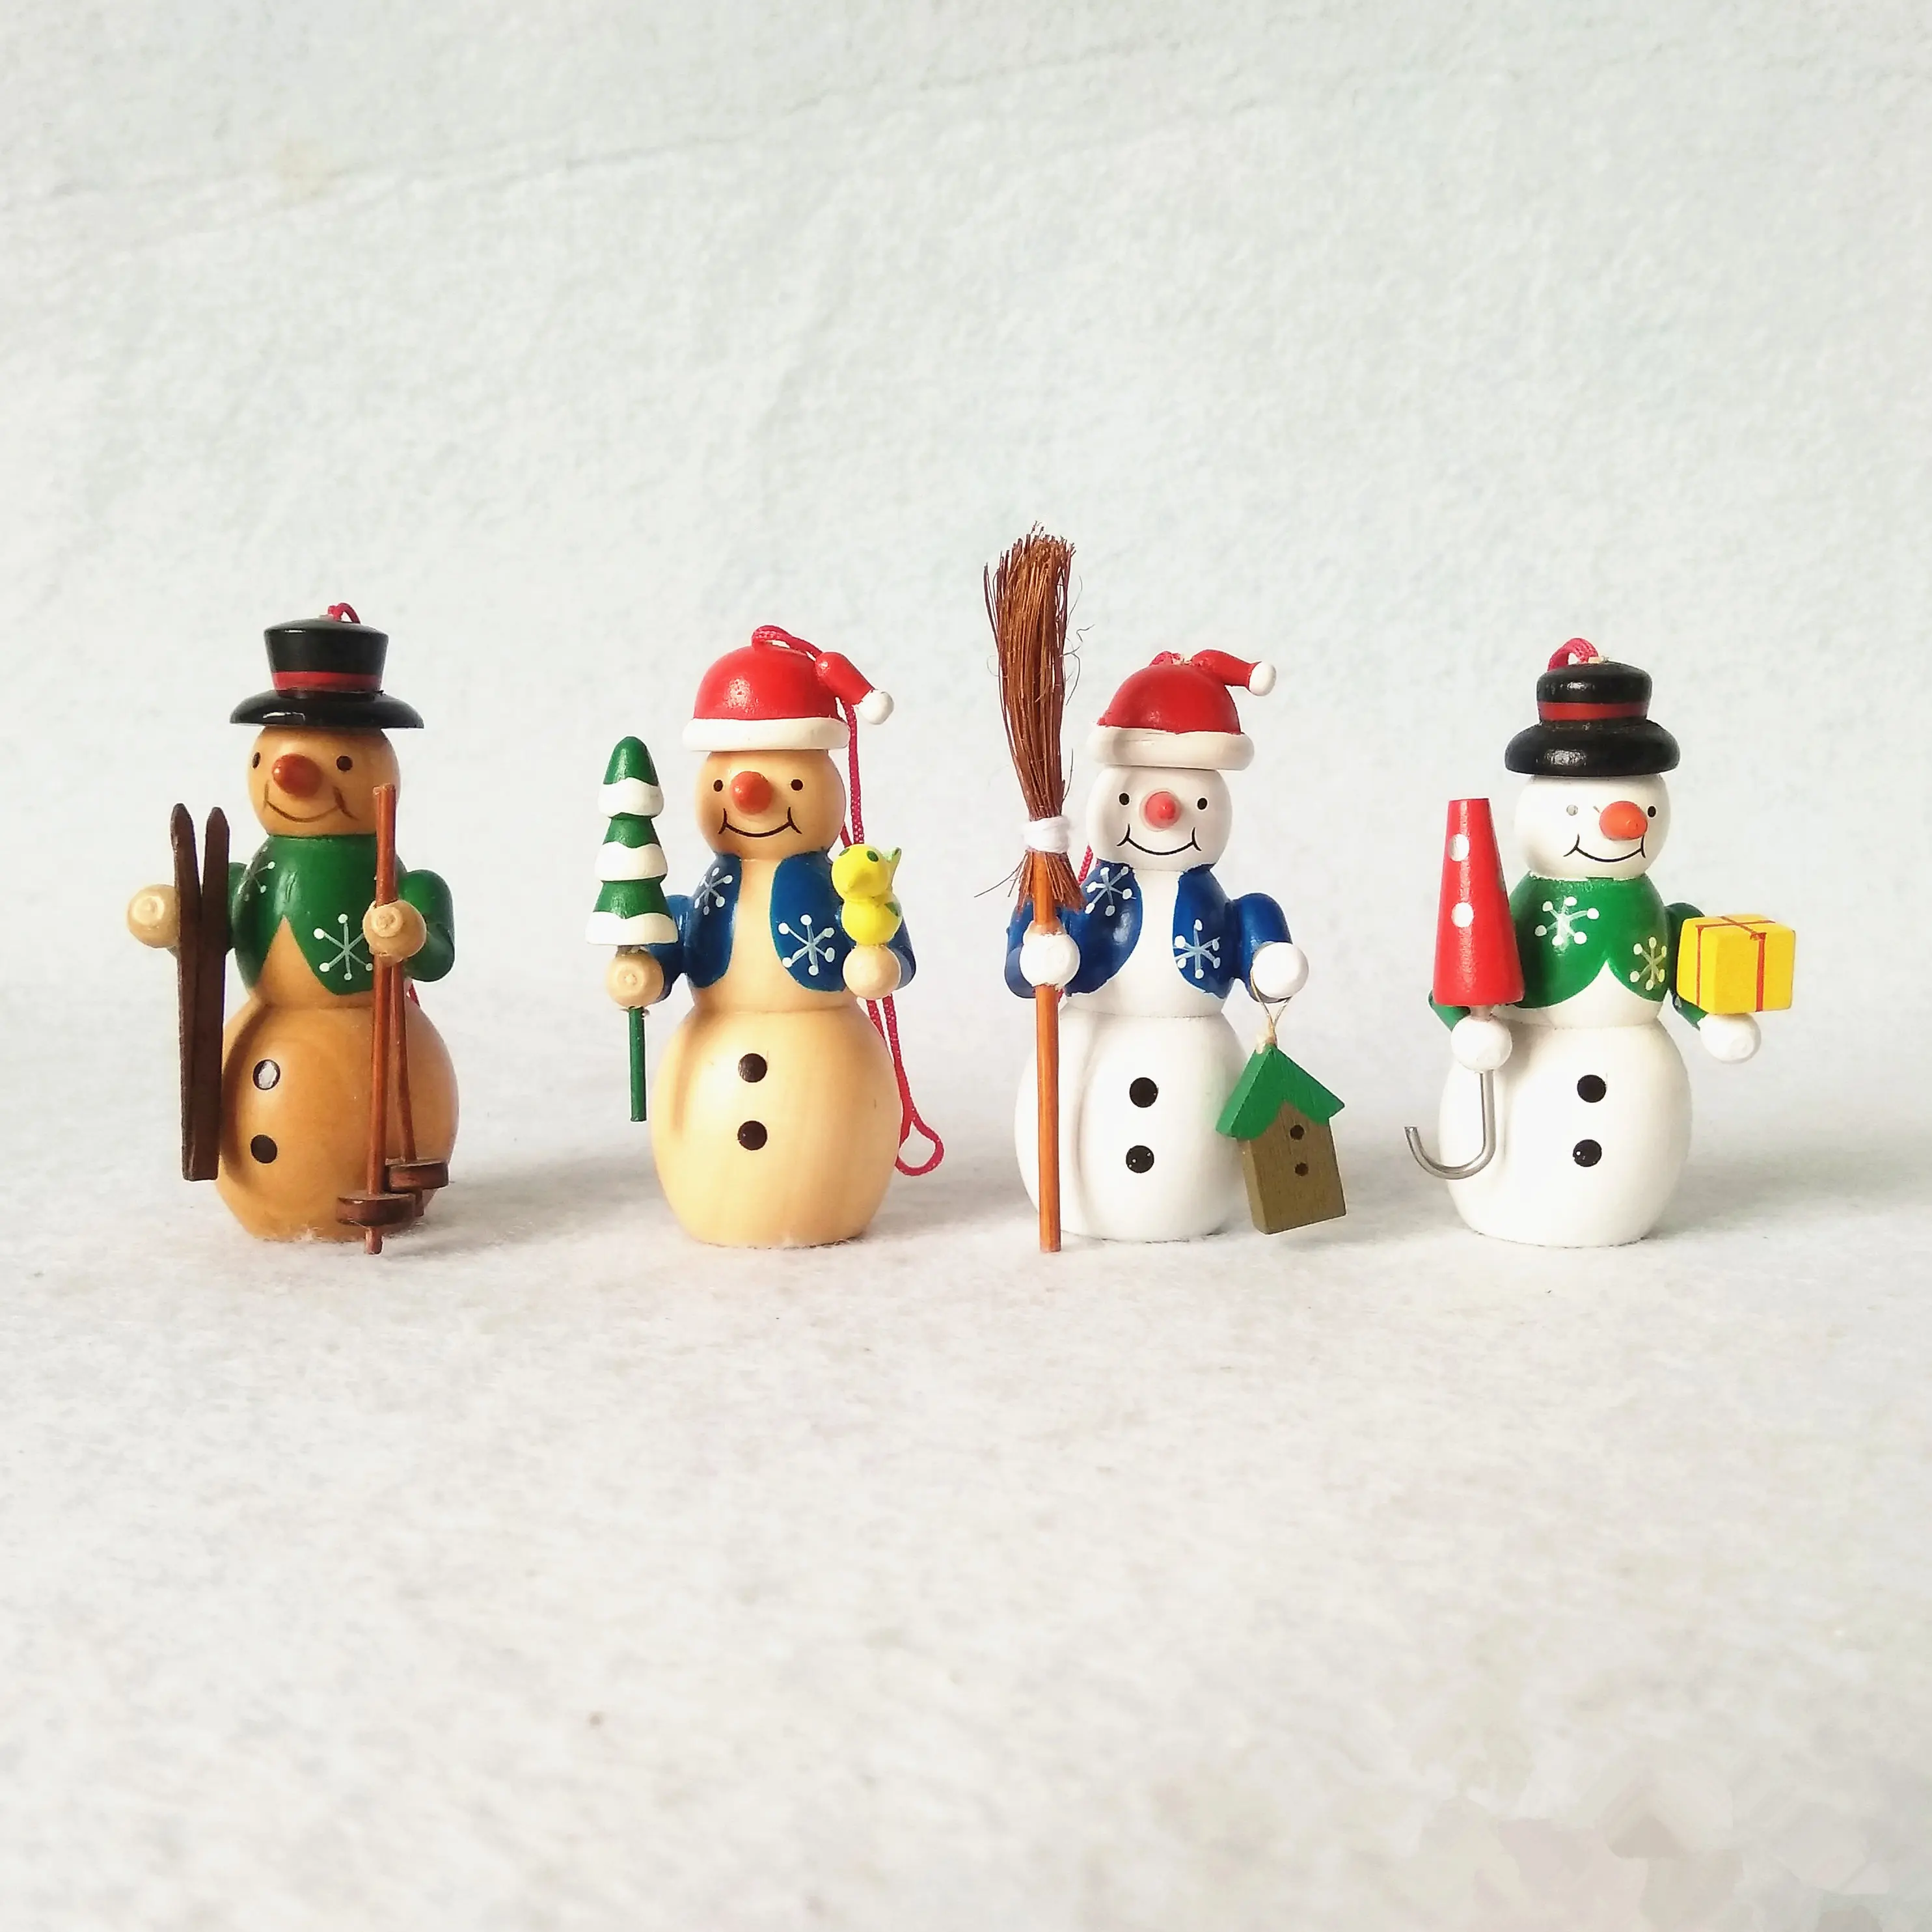 Wooden snowman figurines Christmas tree ornament